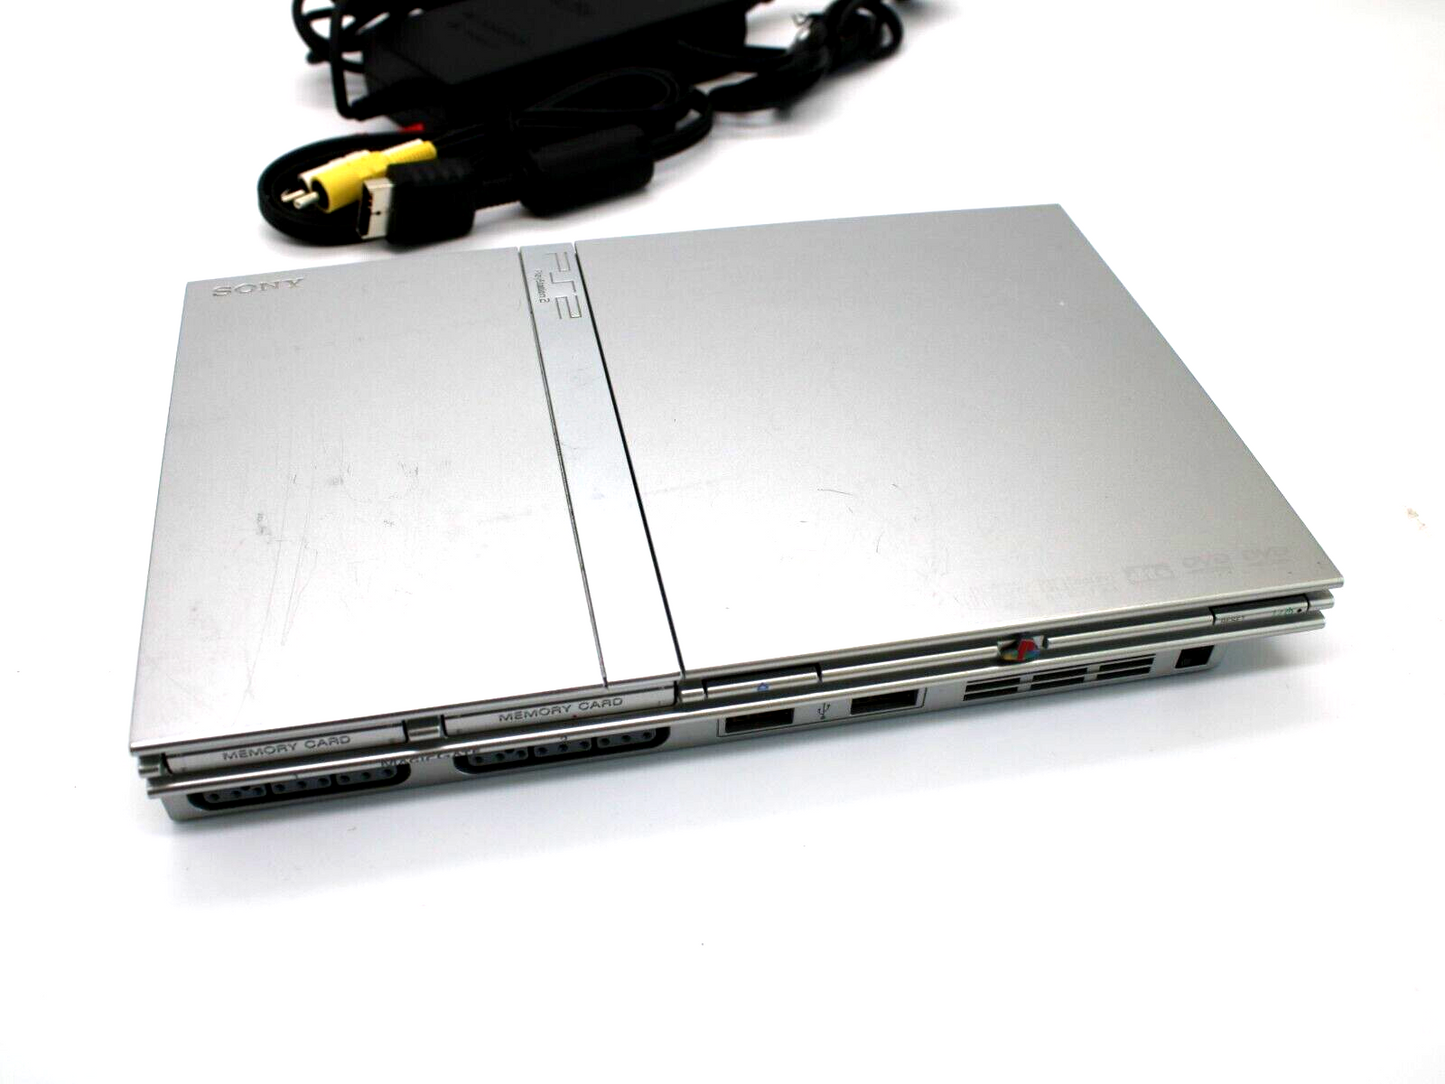 Sony Playstation 2 slim Konsole silber gebraucht PS2